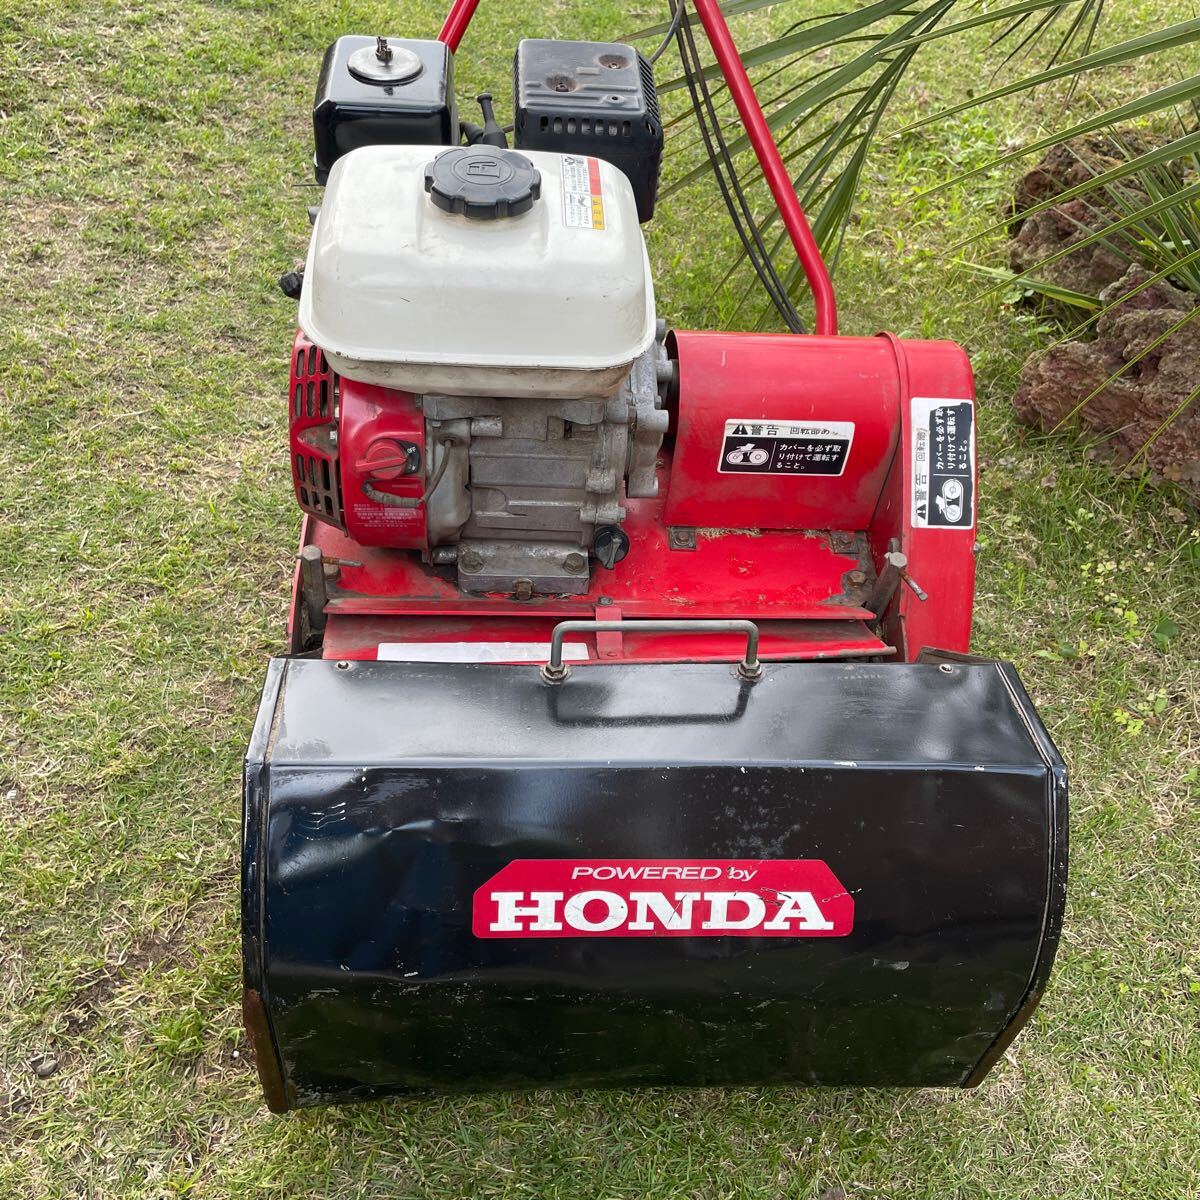  Honda self-propelled lawnmower HL-164 glass kyachi attaching stylish garden ..